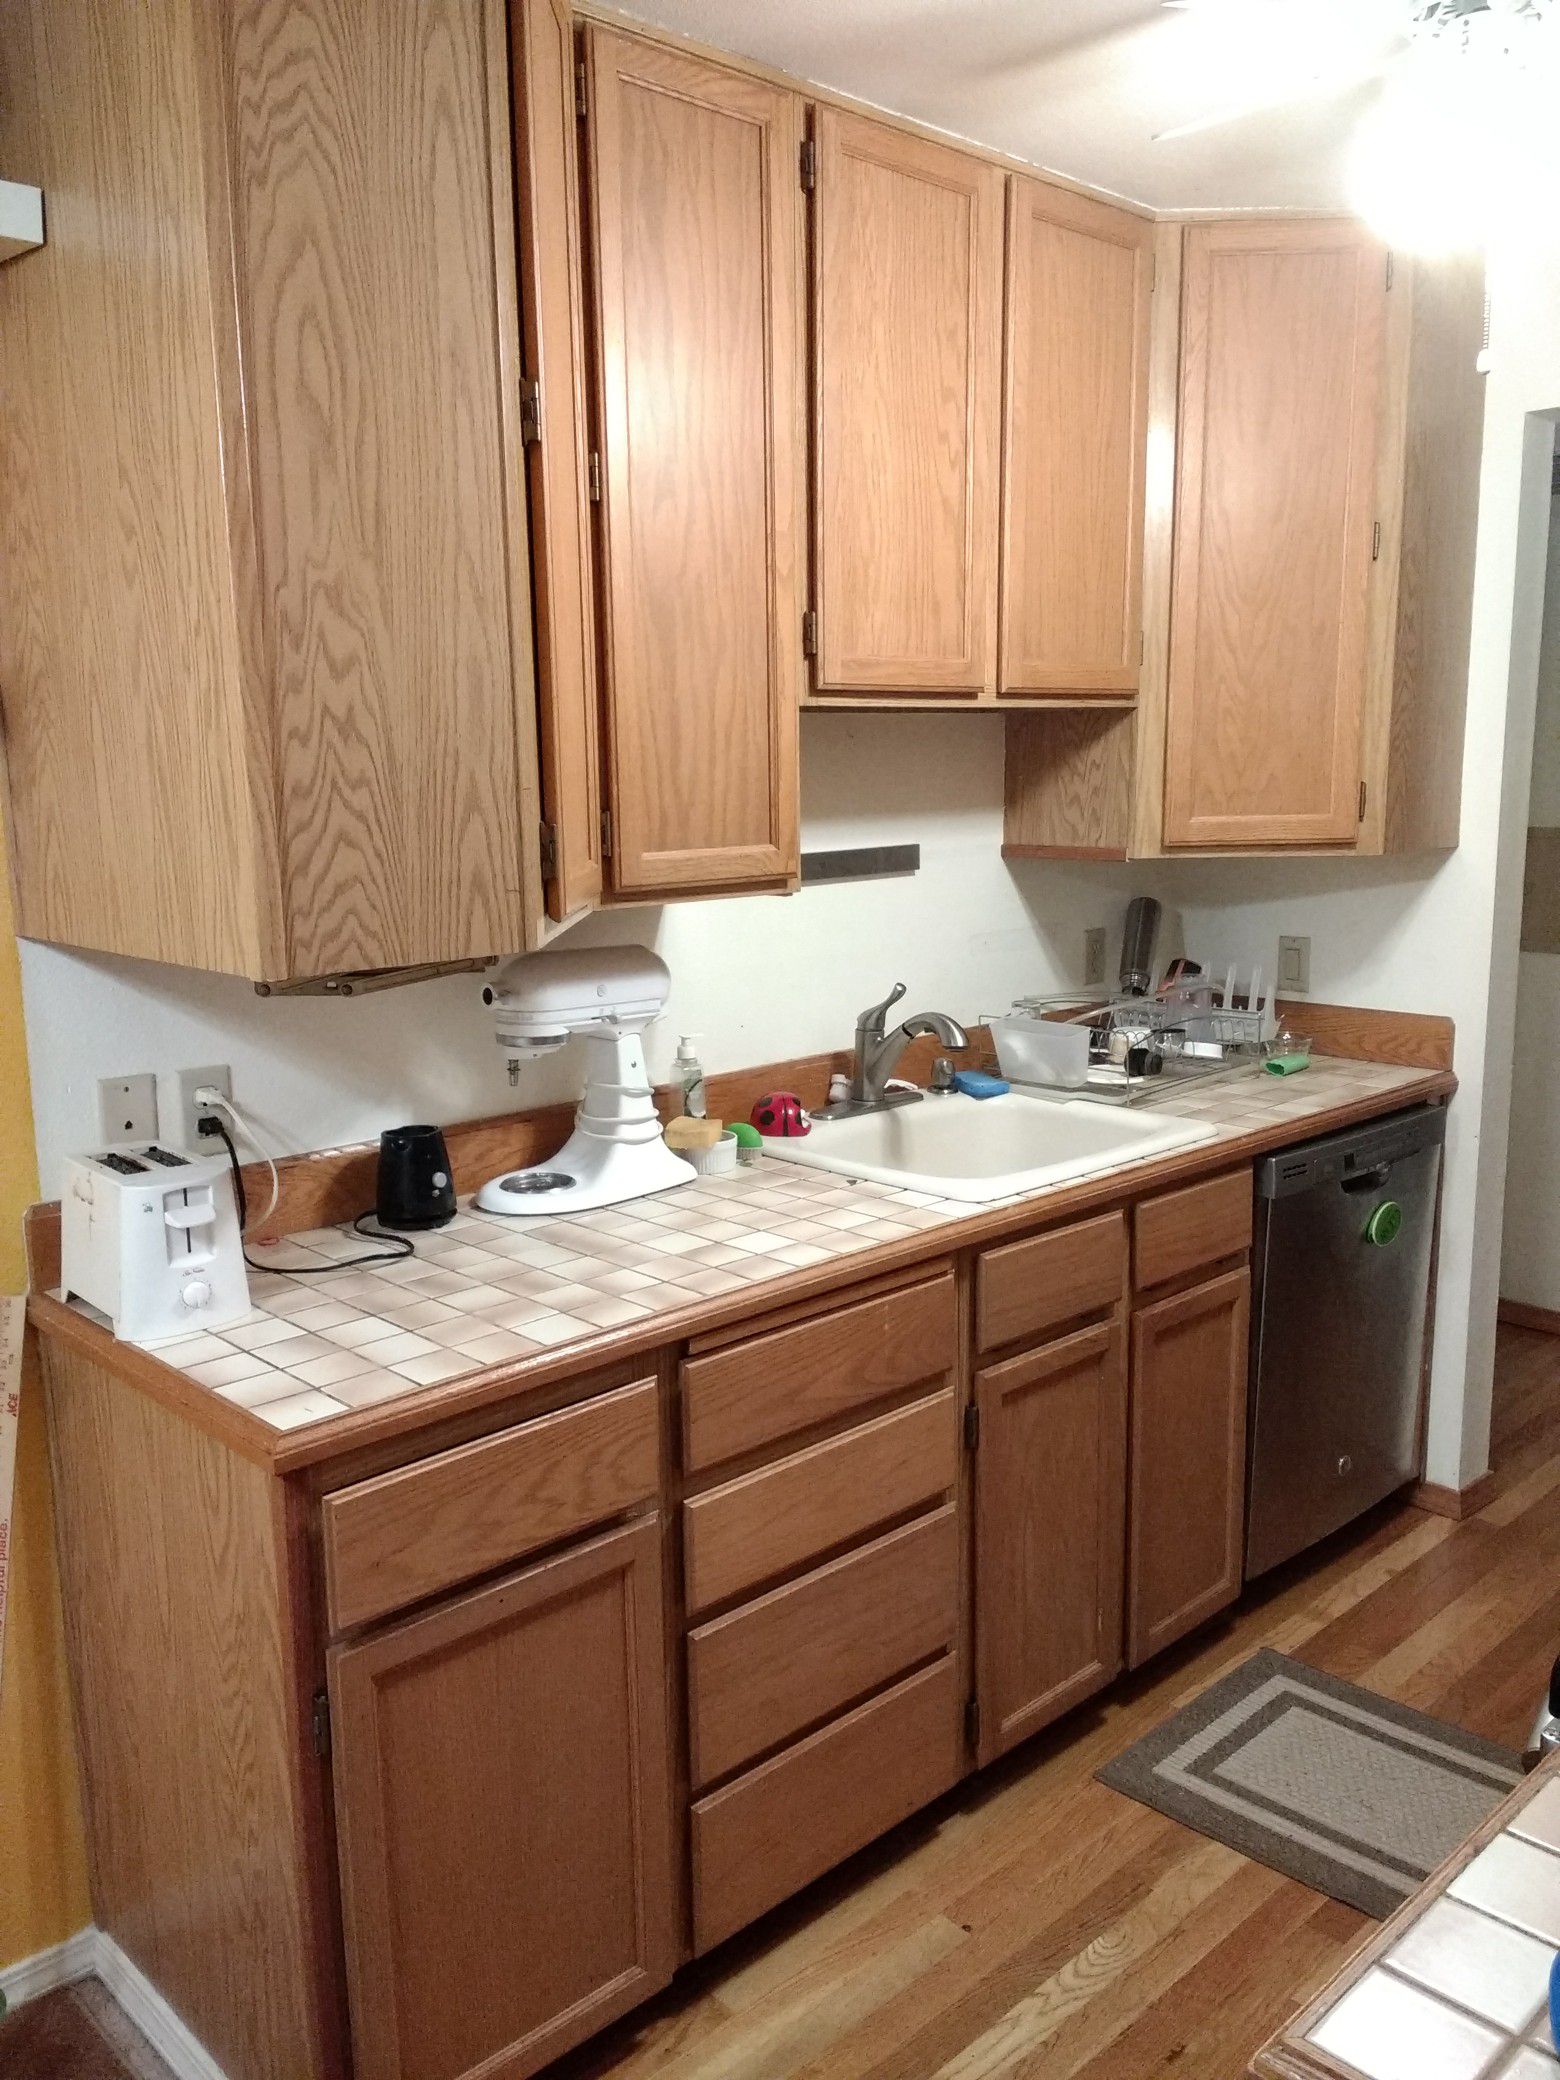 Free kitchen cabinets - great for garage or storage